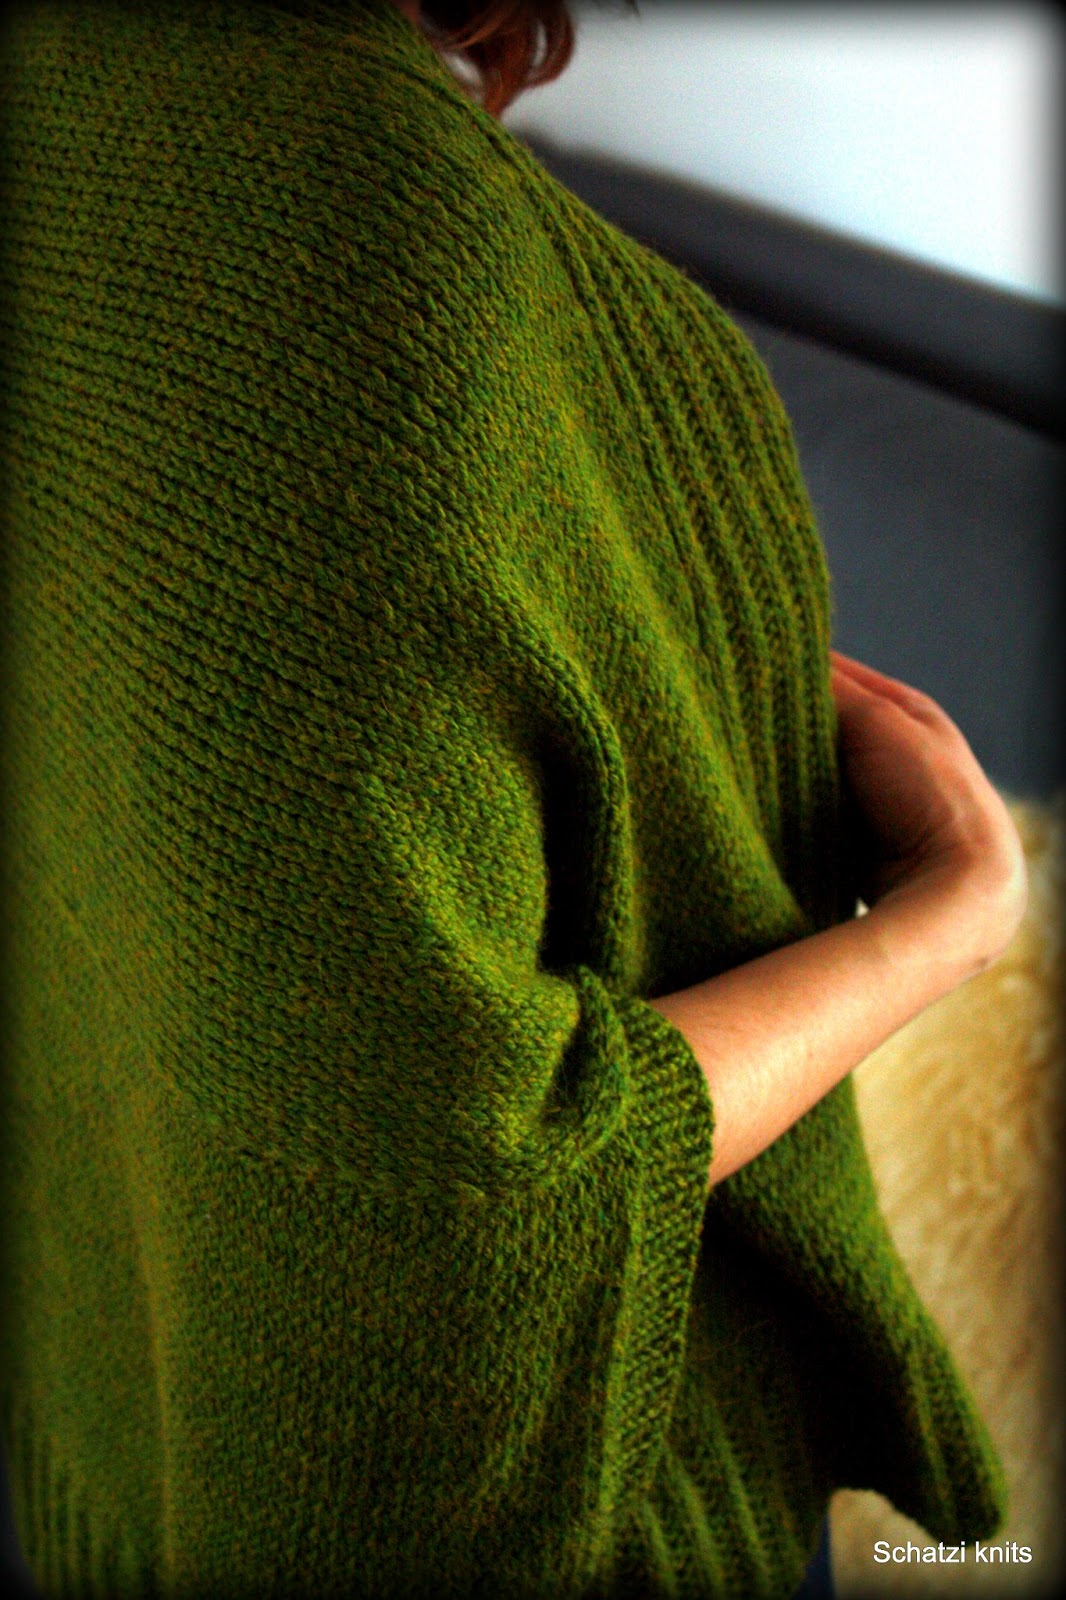 Schatzi's knits: 